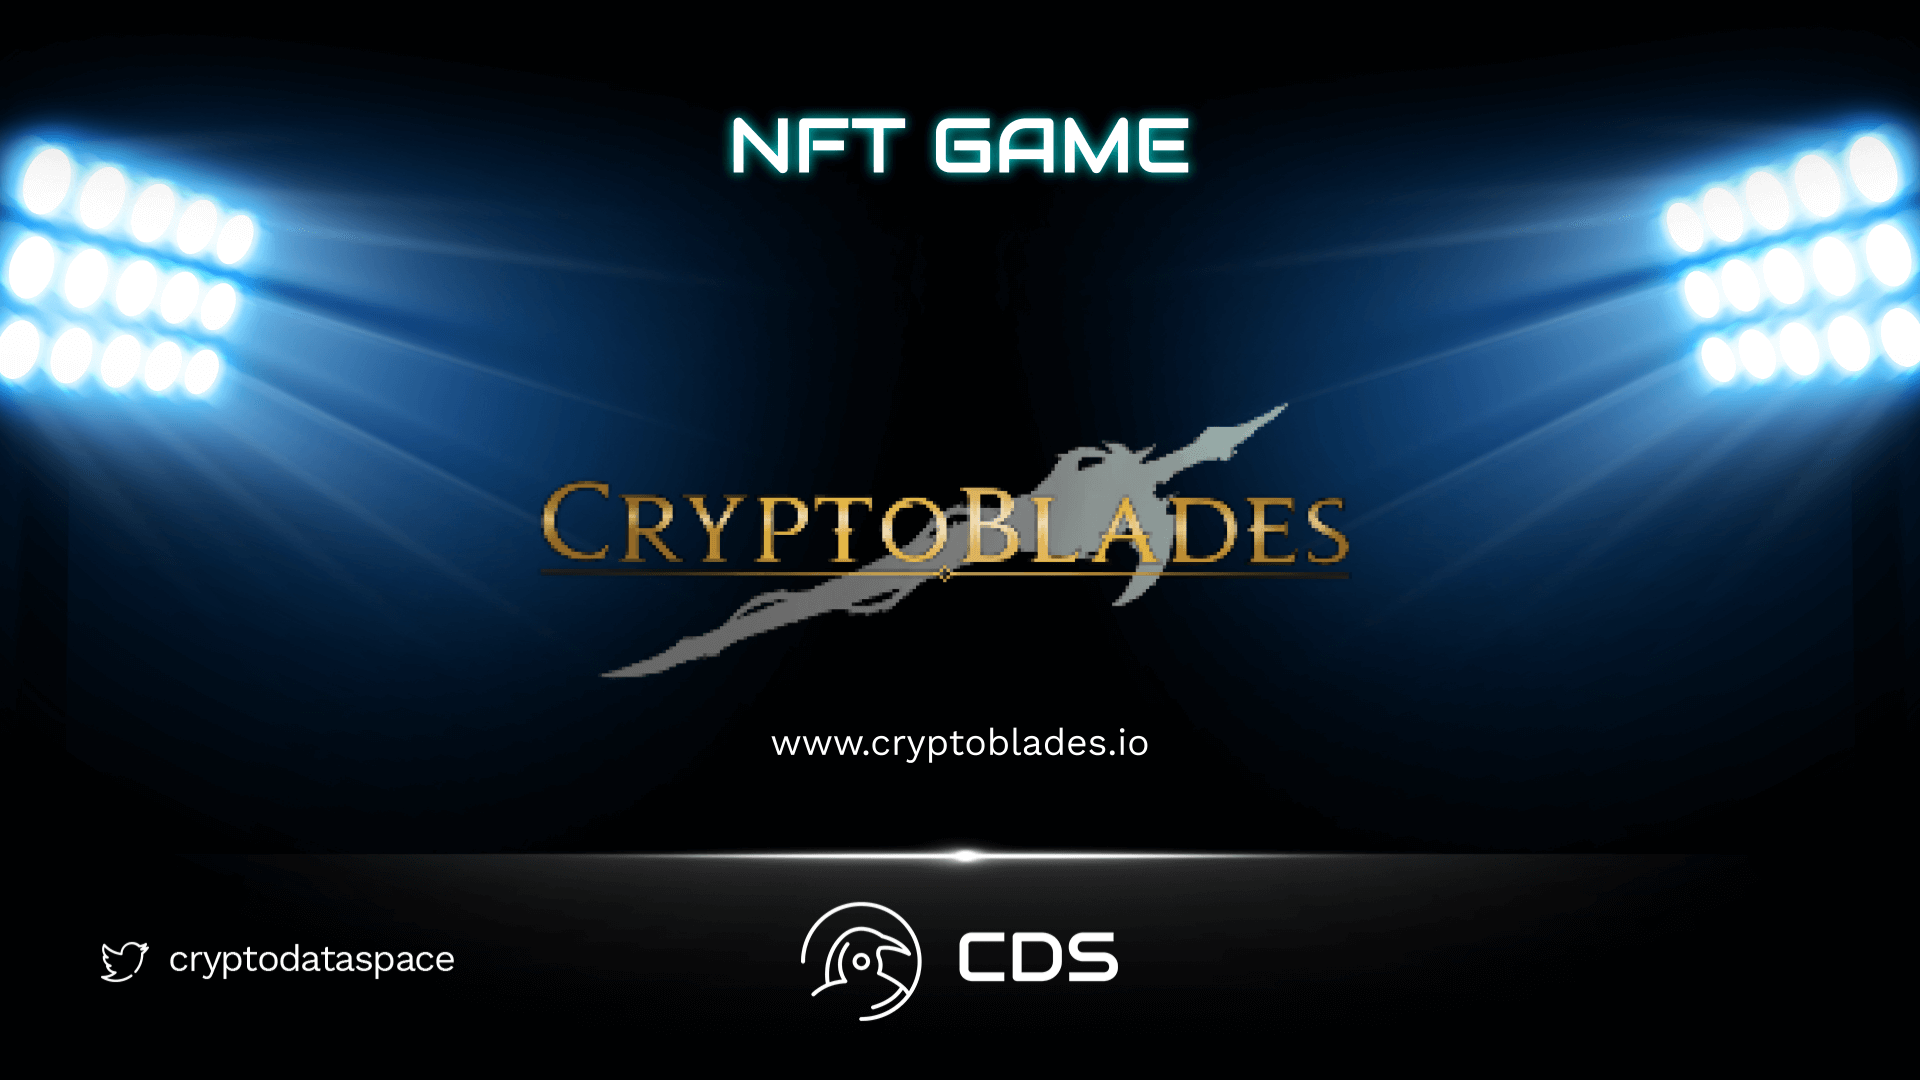 CryptoBlades NFT game